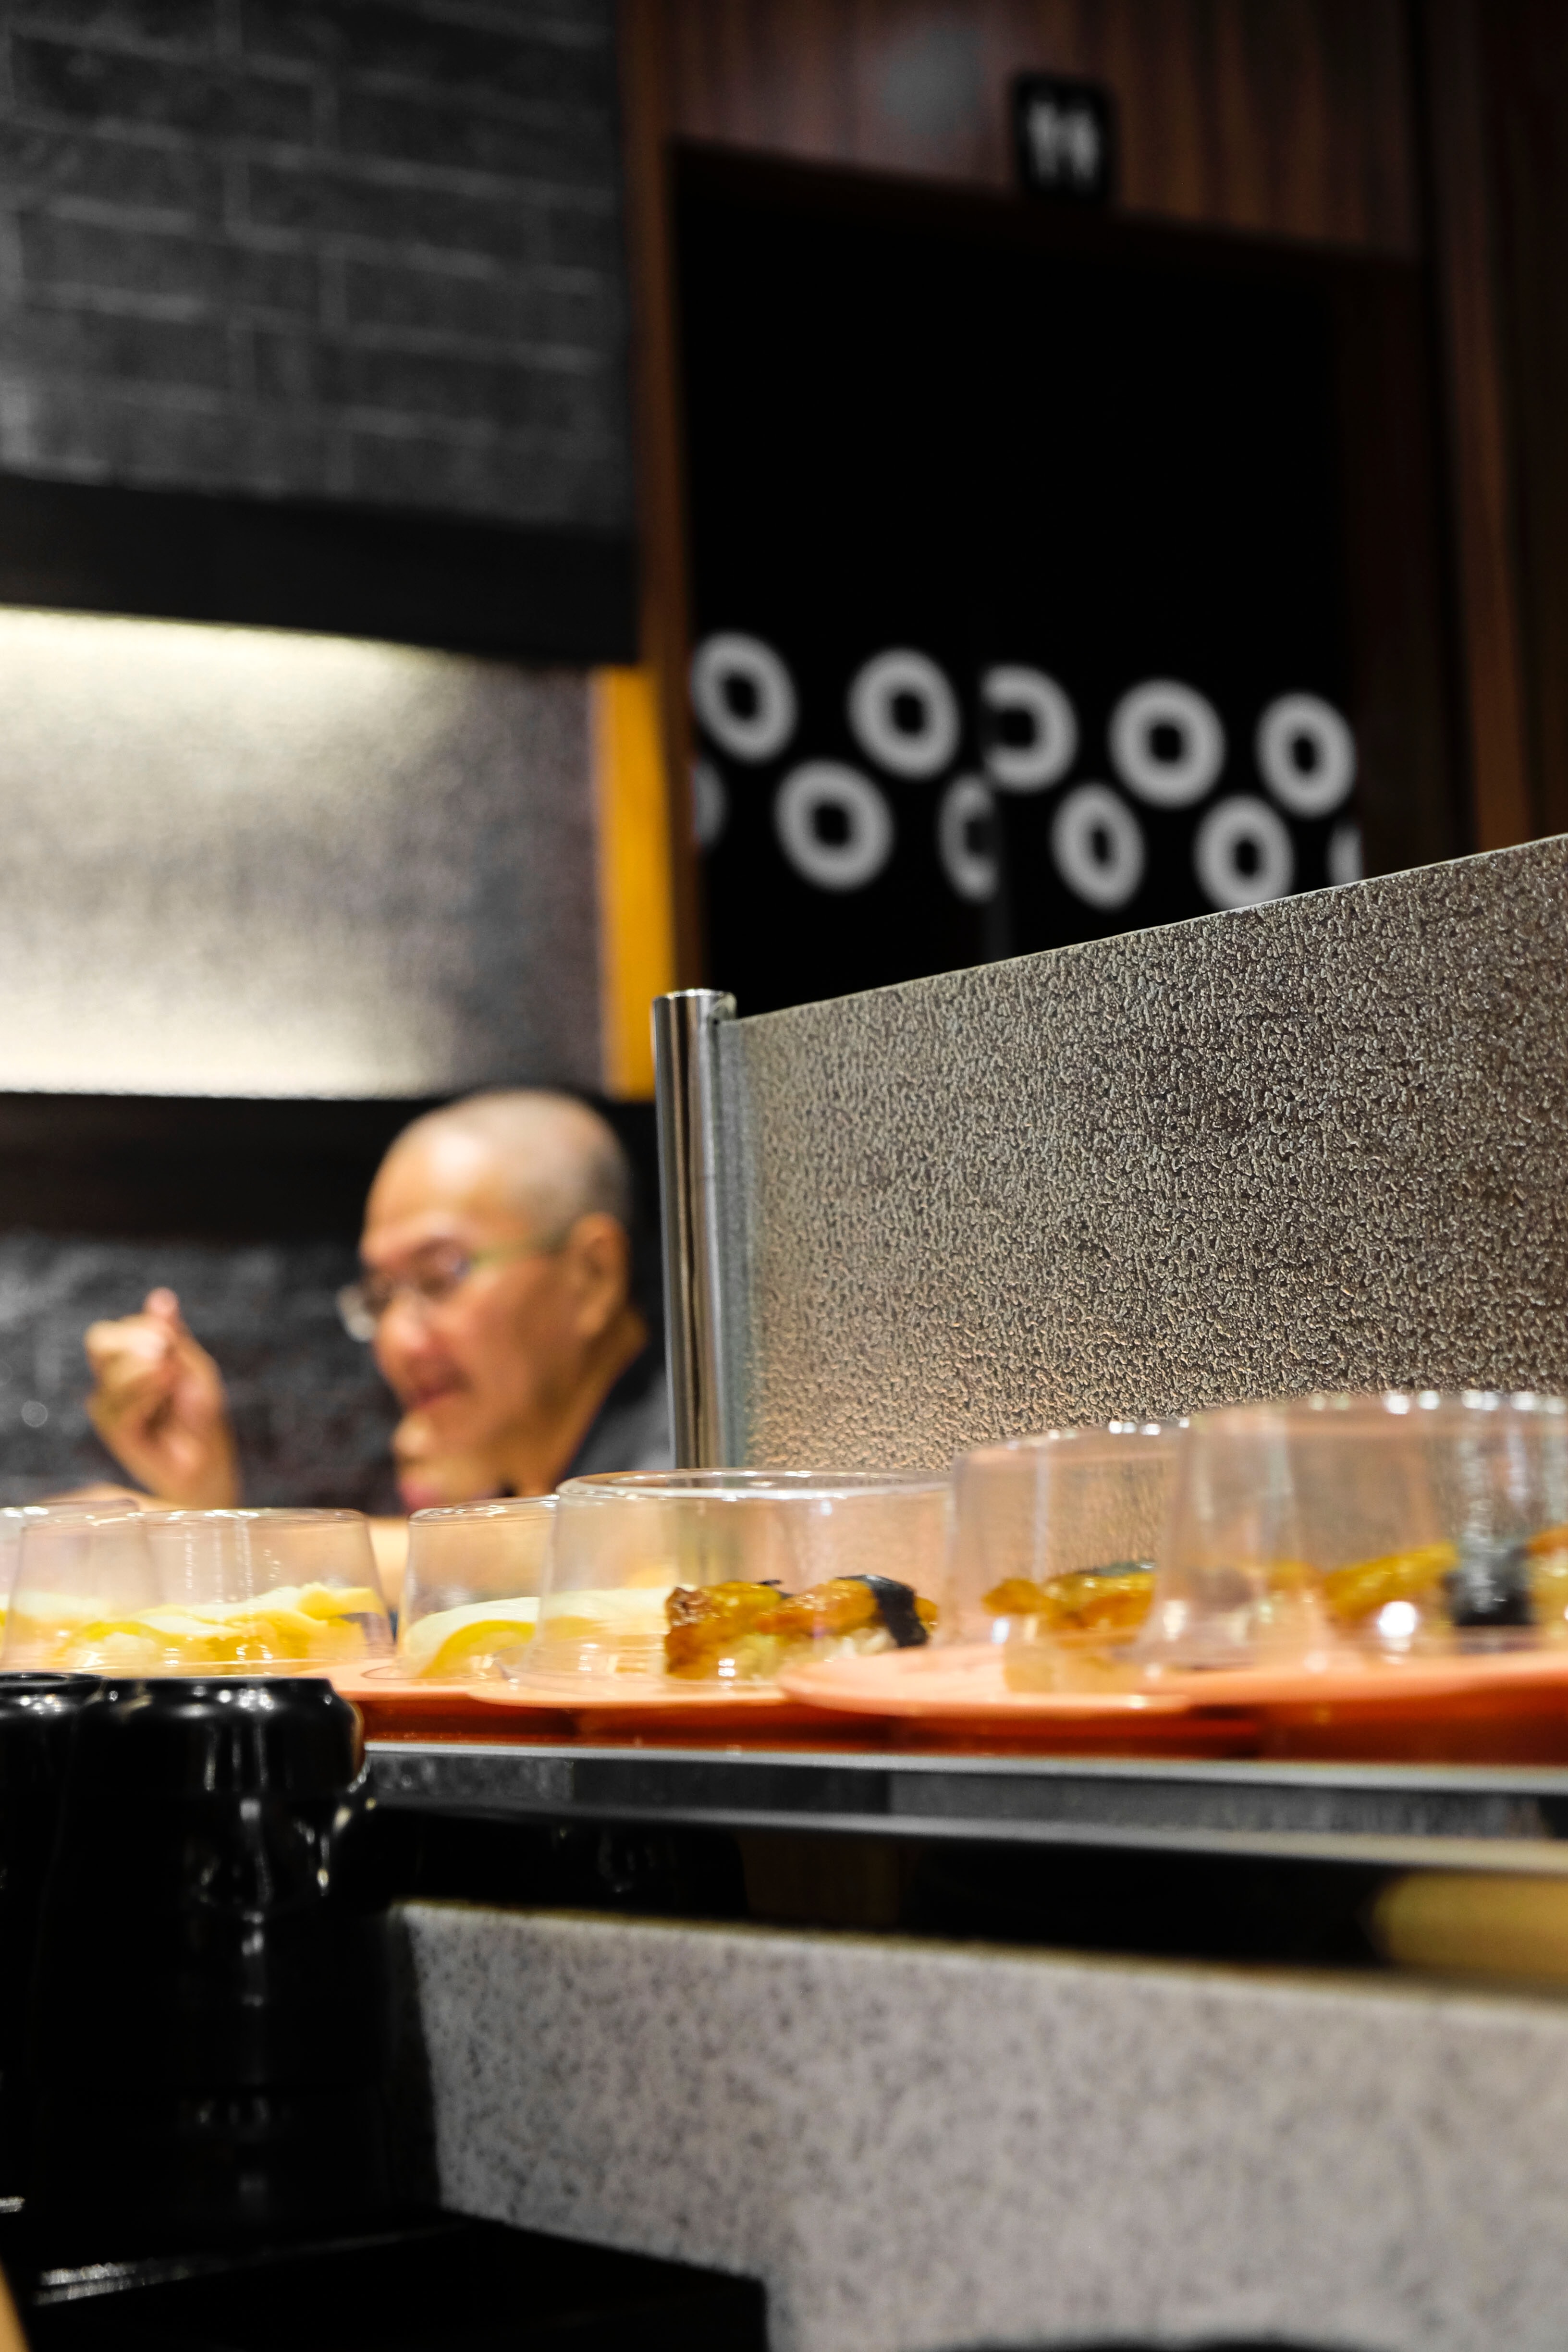 Etika makan sushi di restoran yang menyediakan conveyor belt